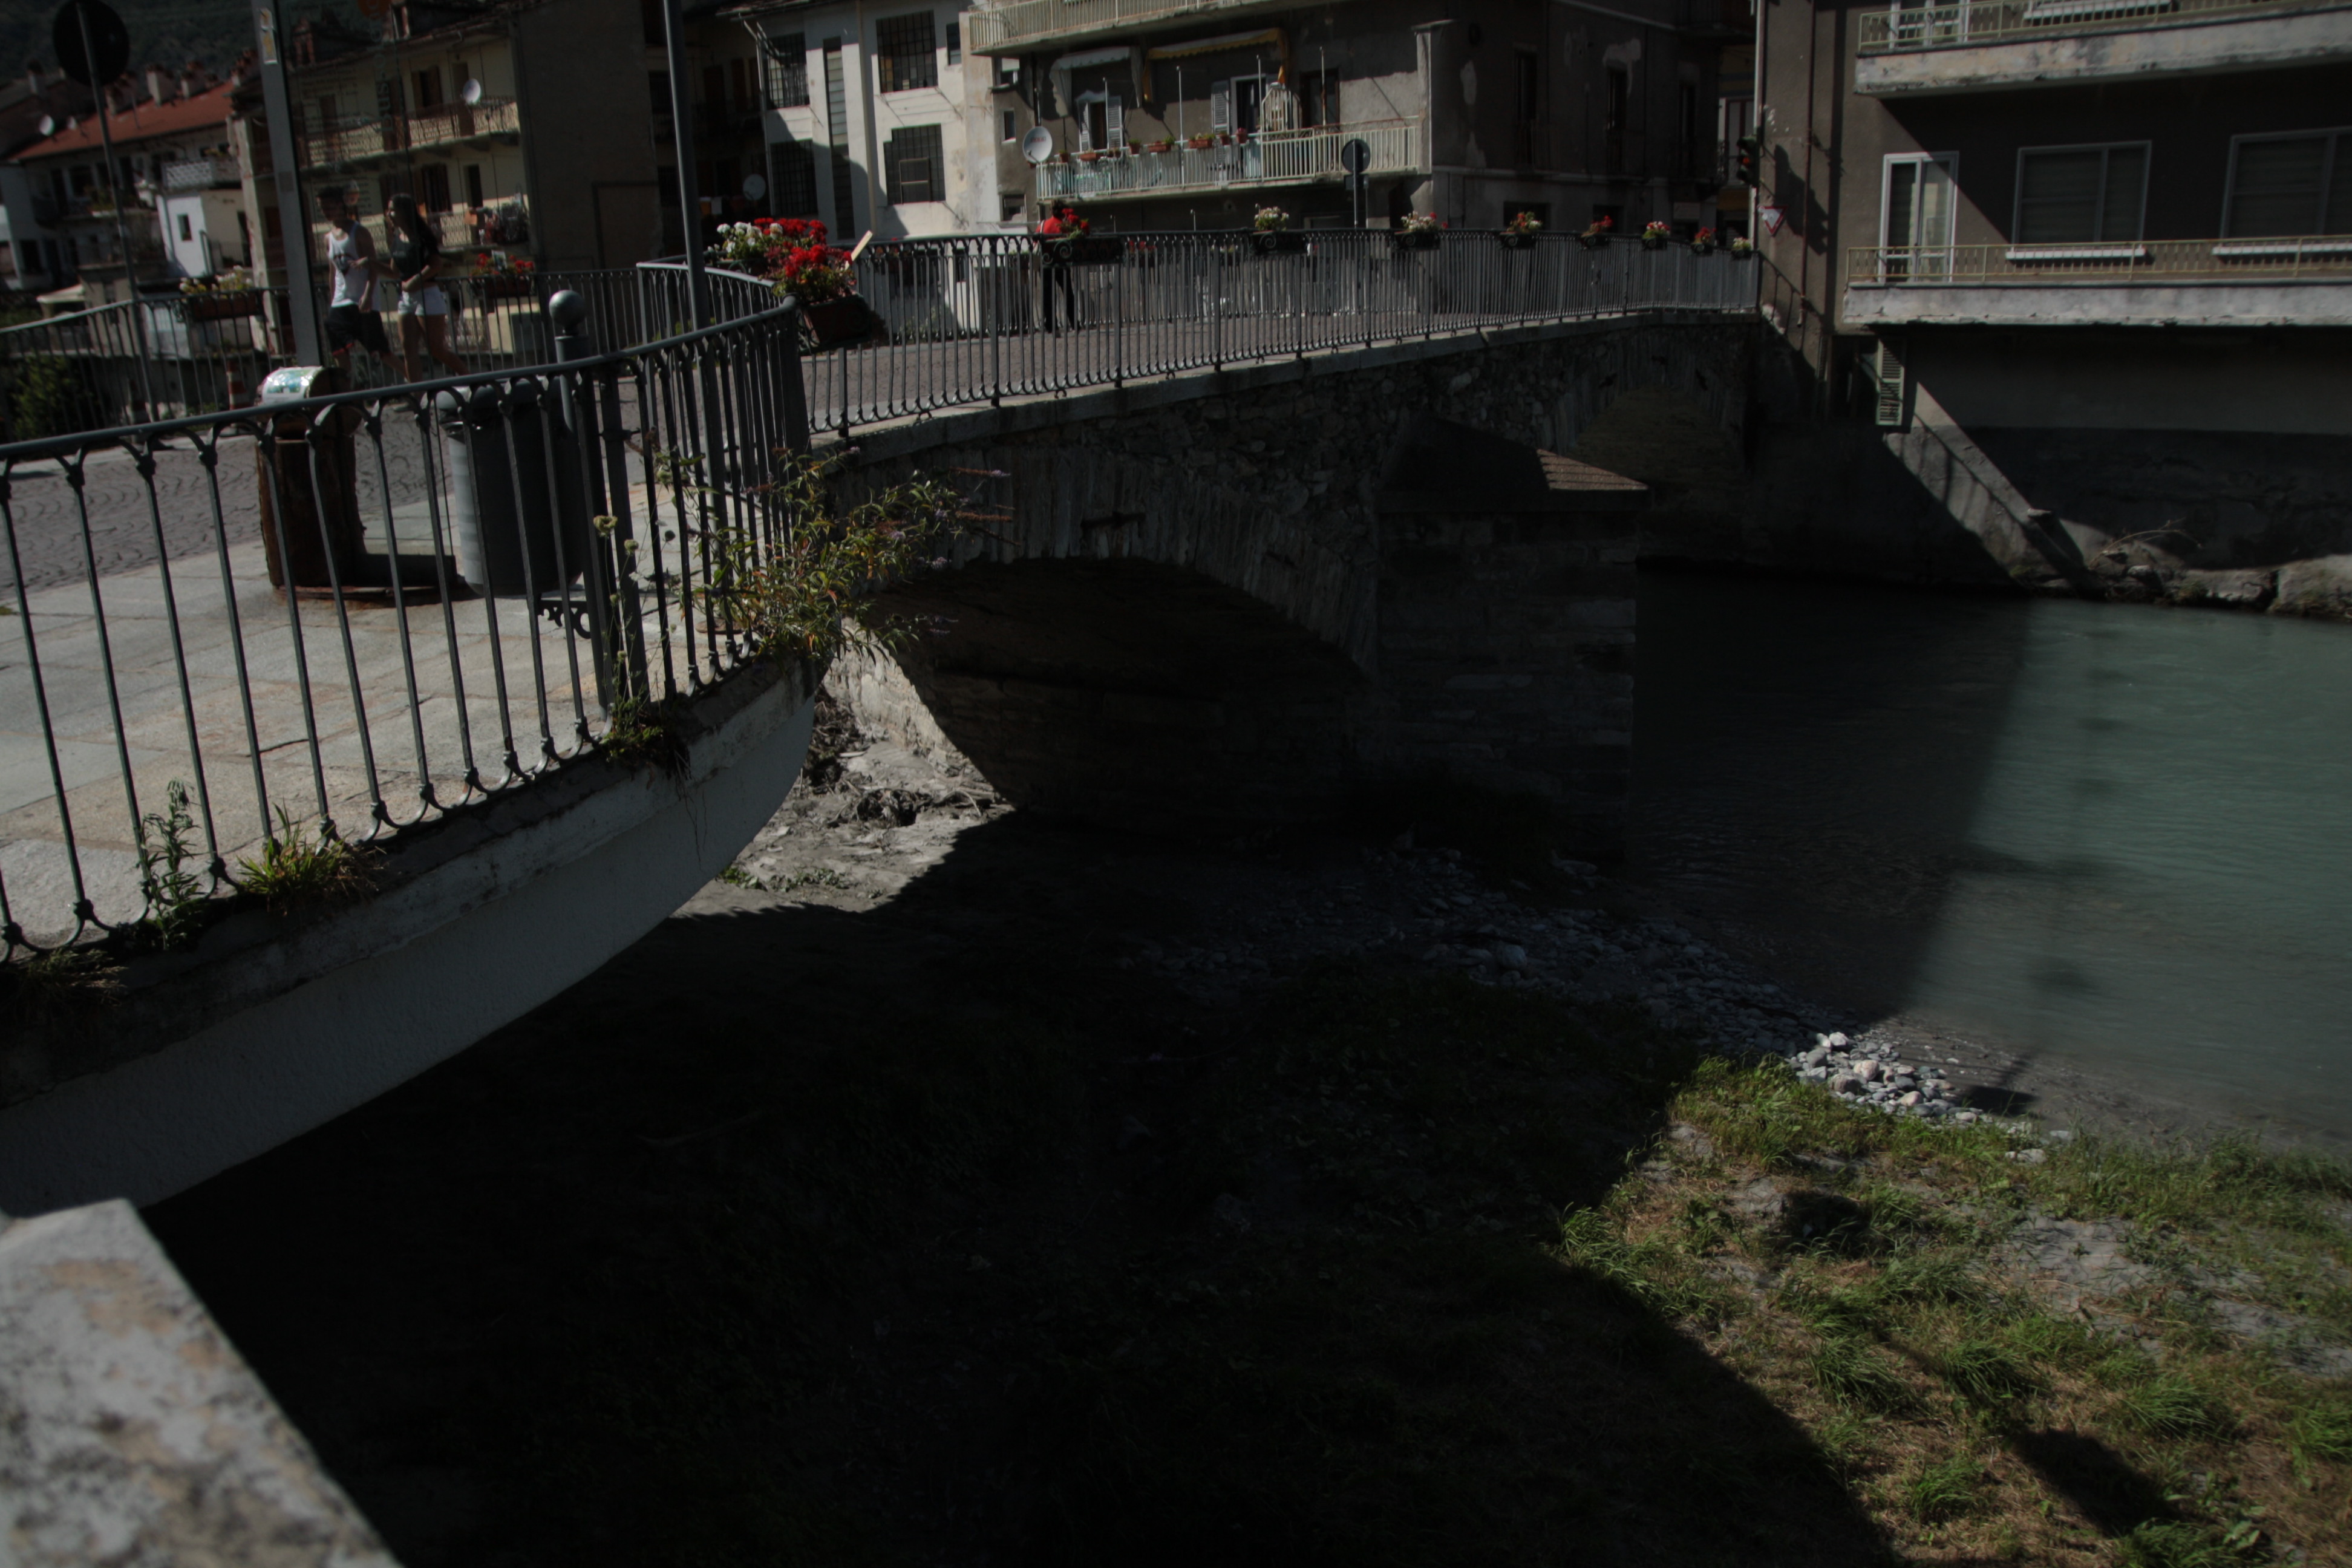 Ponte sulla Dora (ponte) - Bussoleno (TO) 